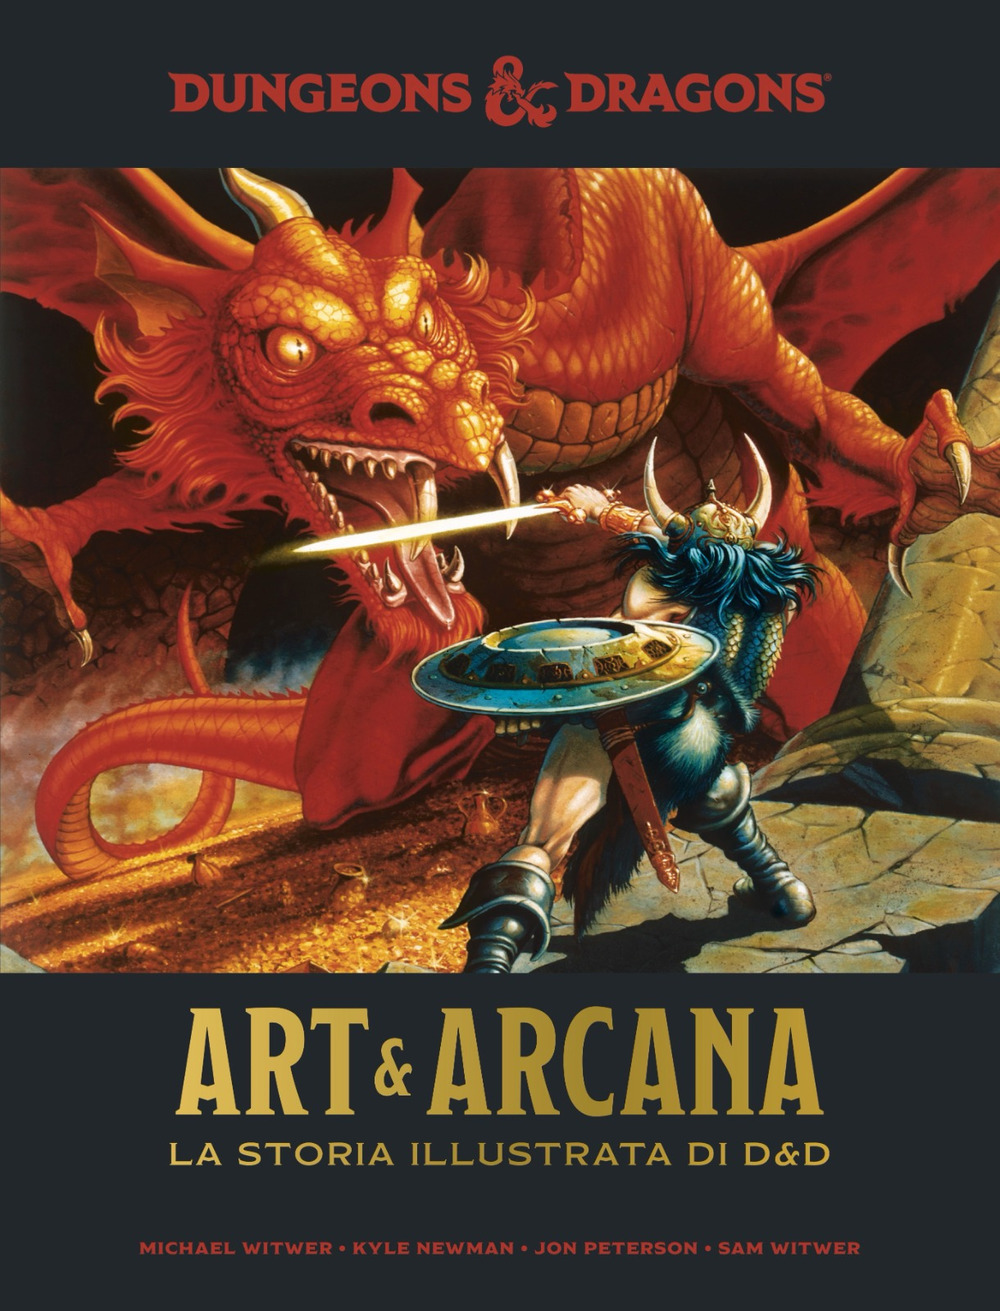 Art & Arcana: la storia illustrata di Dungeons & Dragons. Enciclopedia visuale ufficiale di Dungeons & Dragons. Ediz. ampliata